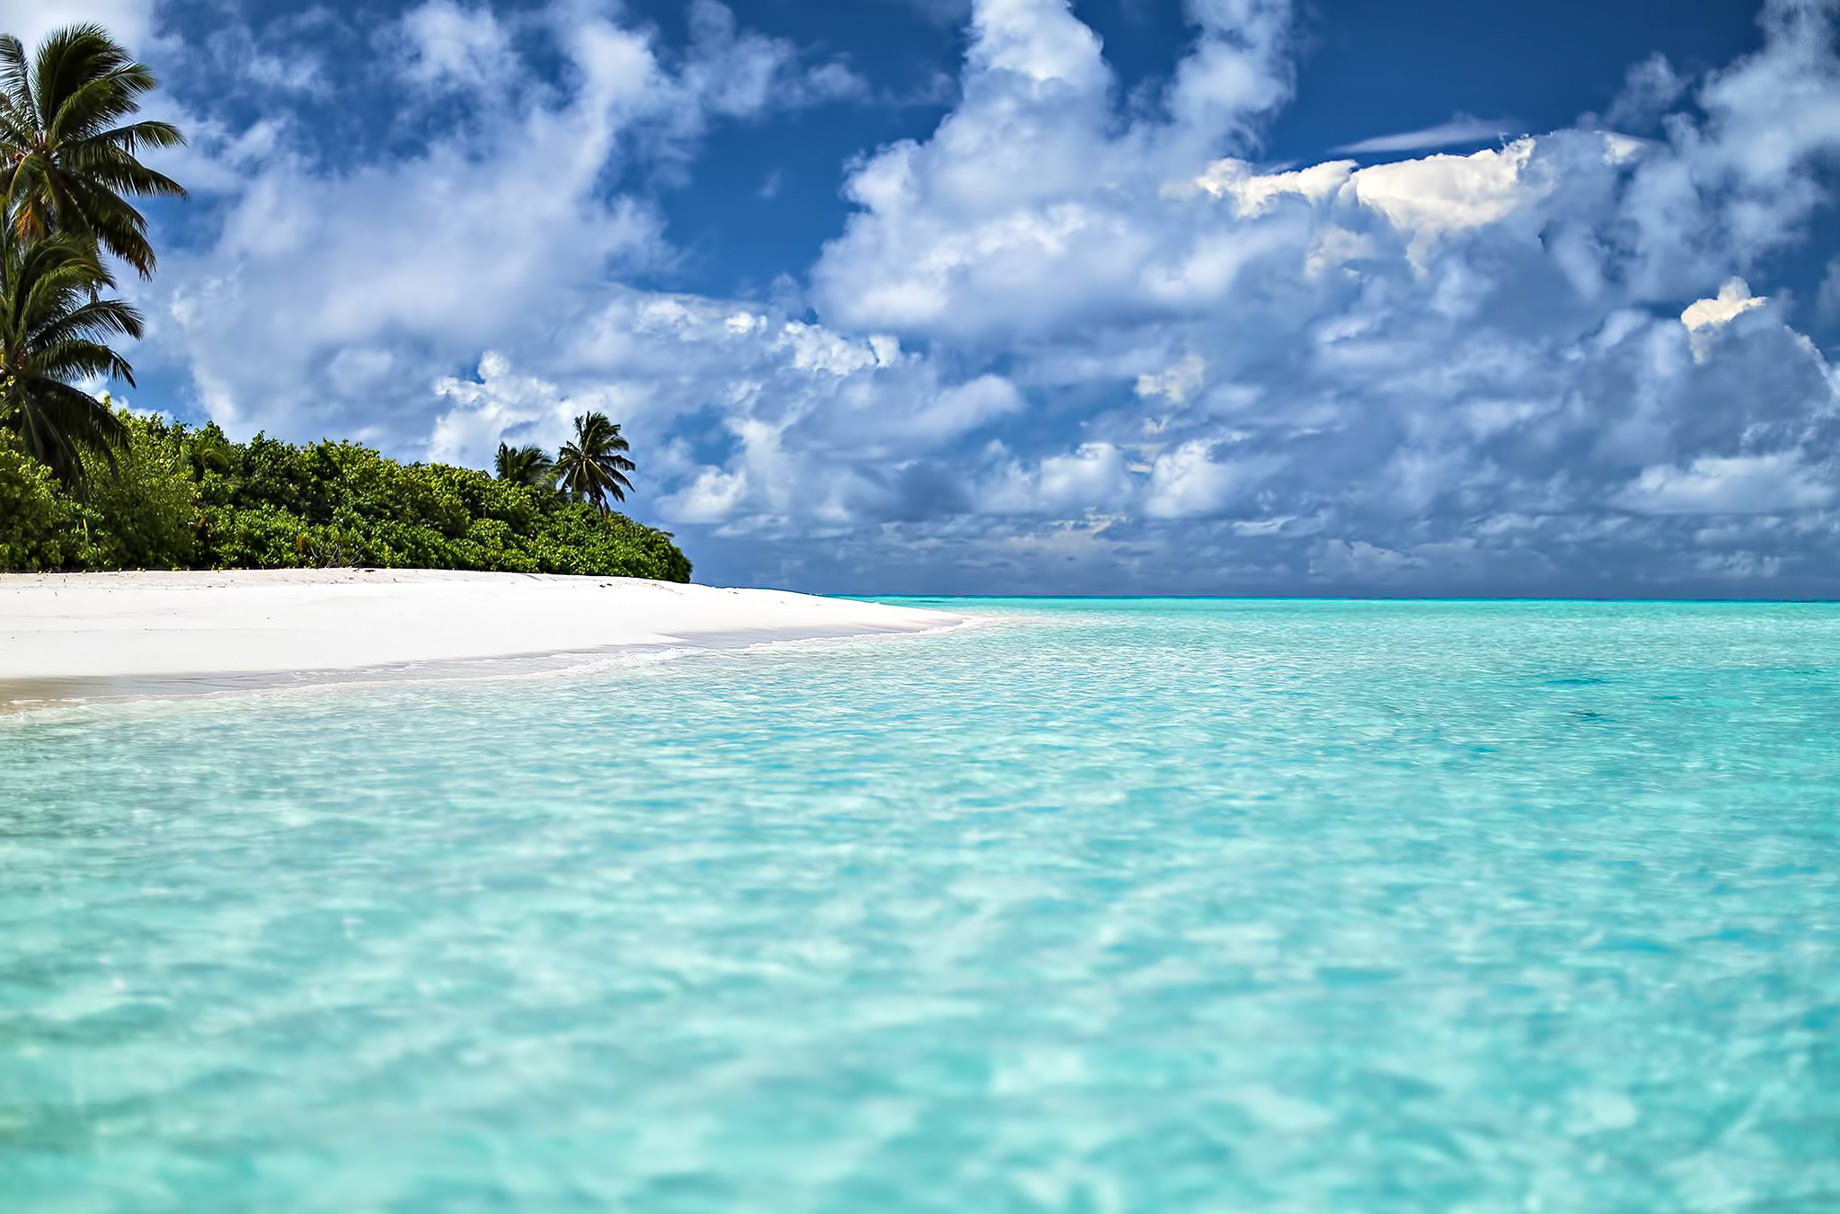 Six Senses Laamu Resort - Laamu Atoll, Maldives - Private White Sand Beach